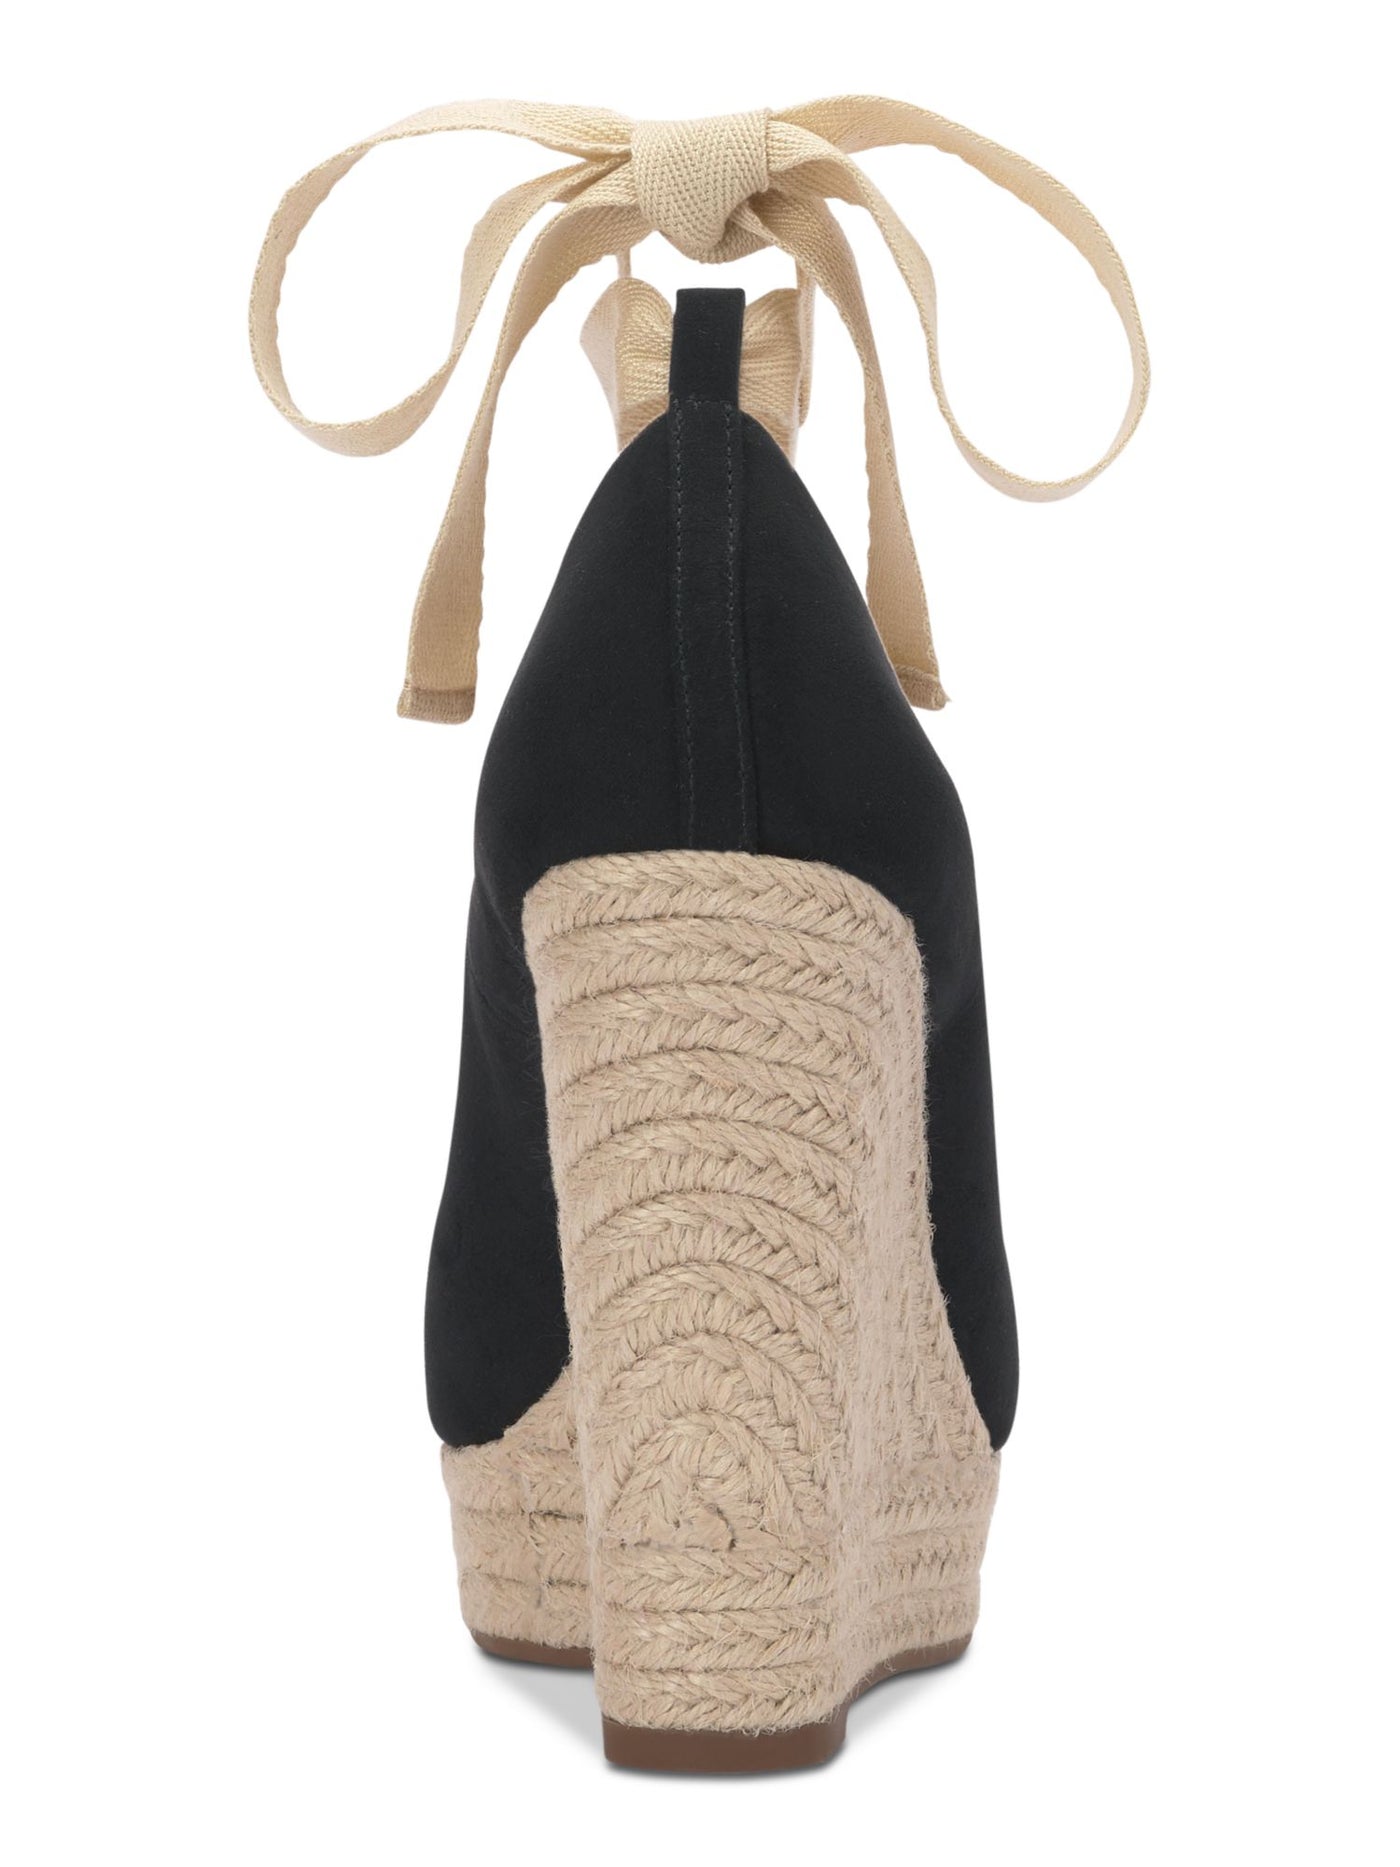 JESSICA SIMPSON Womens Black Ankle Wrap 1" Platform Padded Zavida Peep Toe Wedge Lace-Up Espadrille Shoes 5.5 M